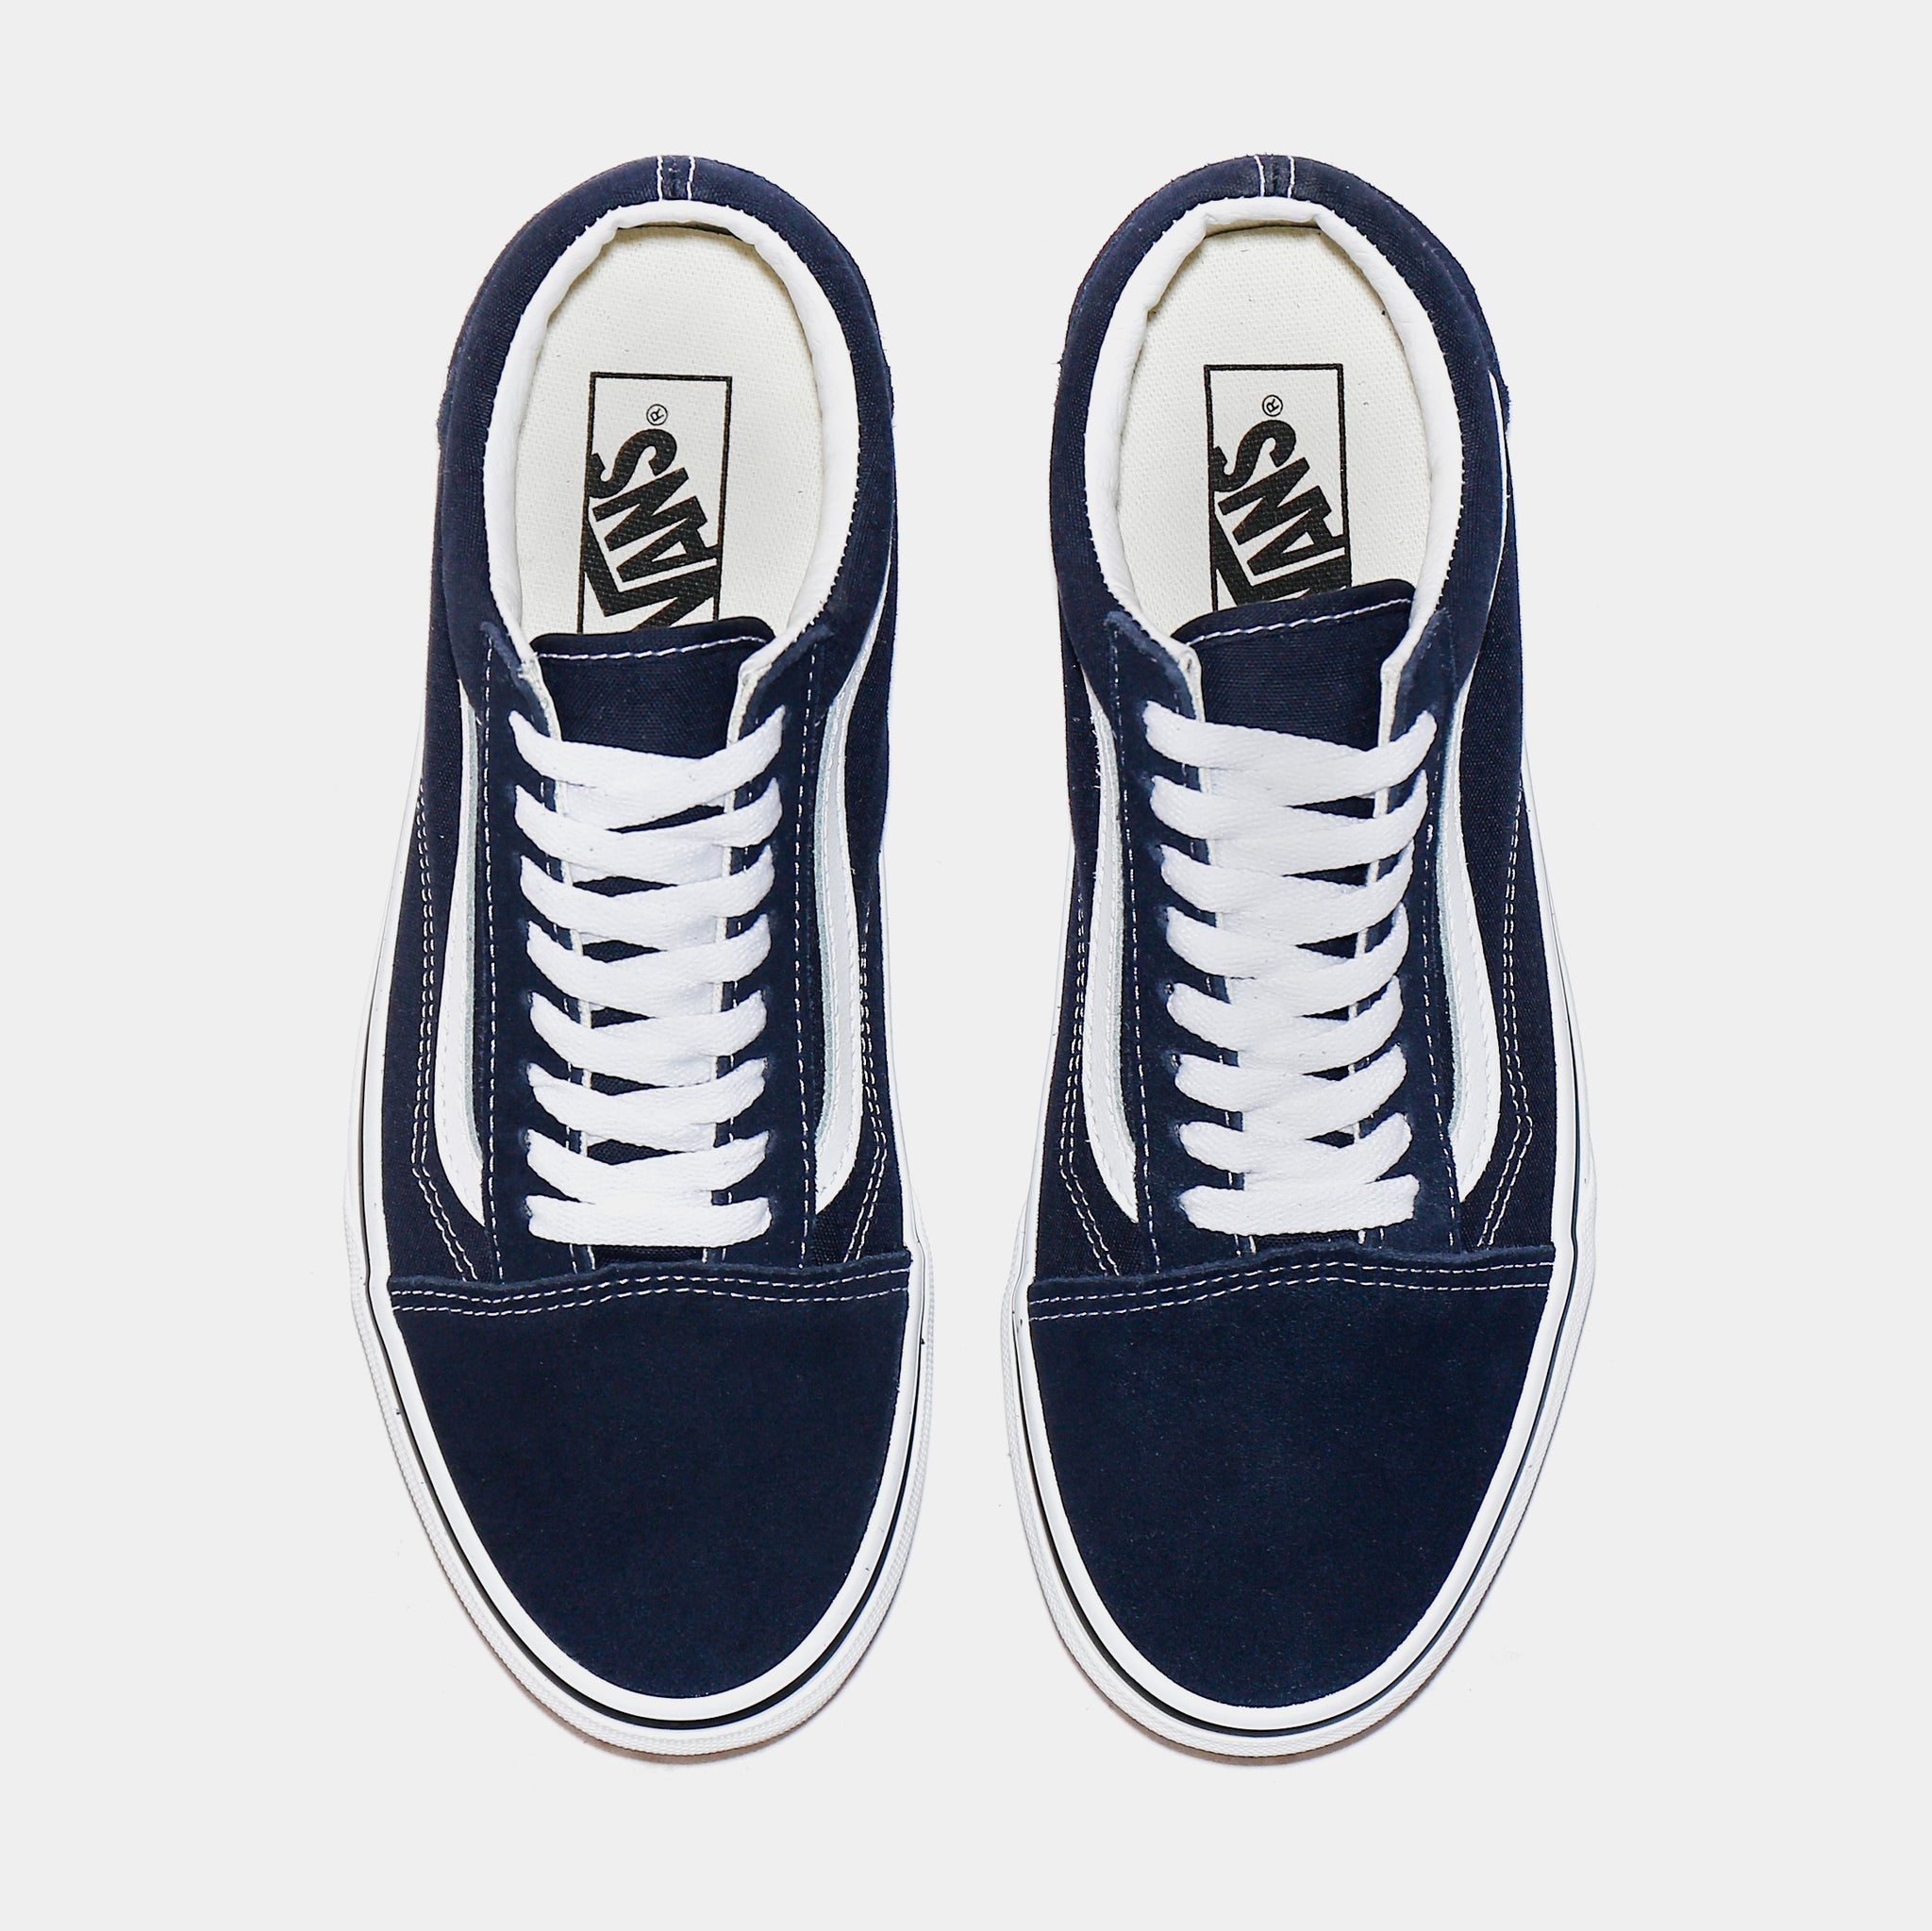 Mens Skate Shoes Navy Blue JMI4W6 – Shoe Palace